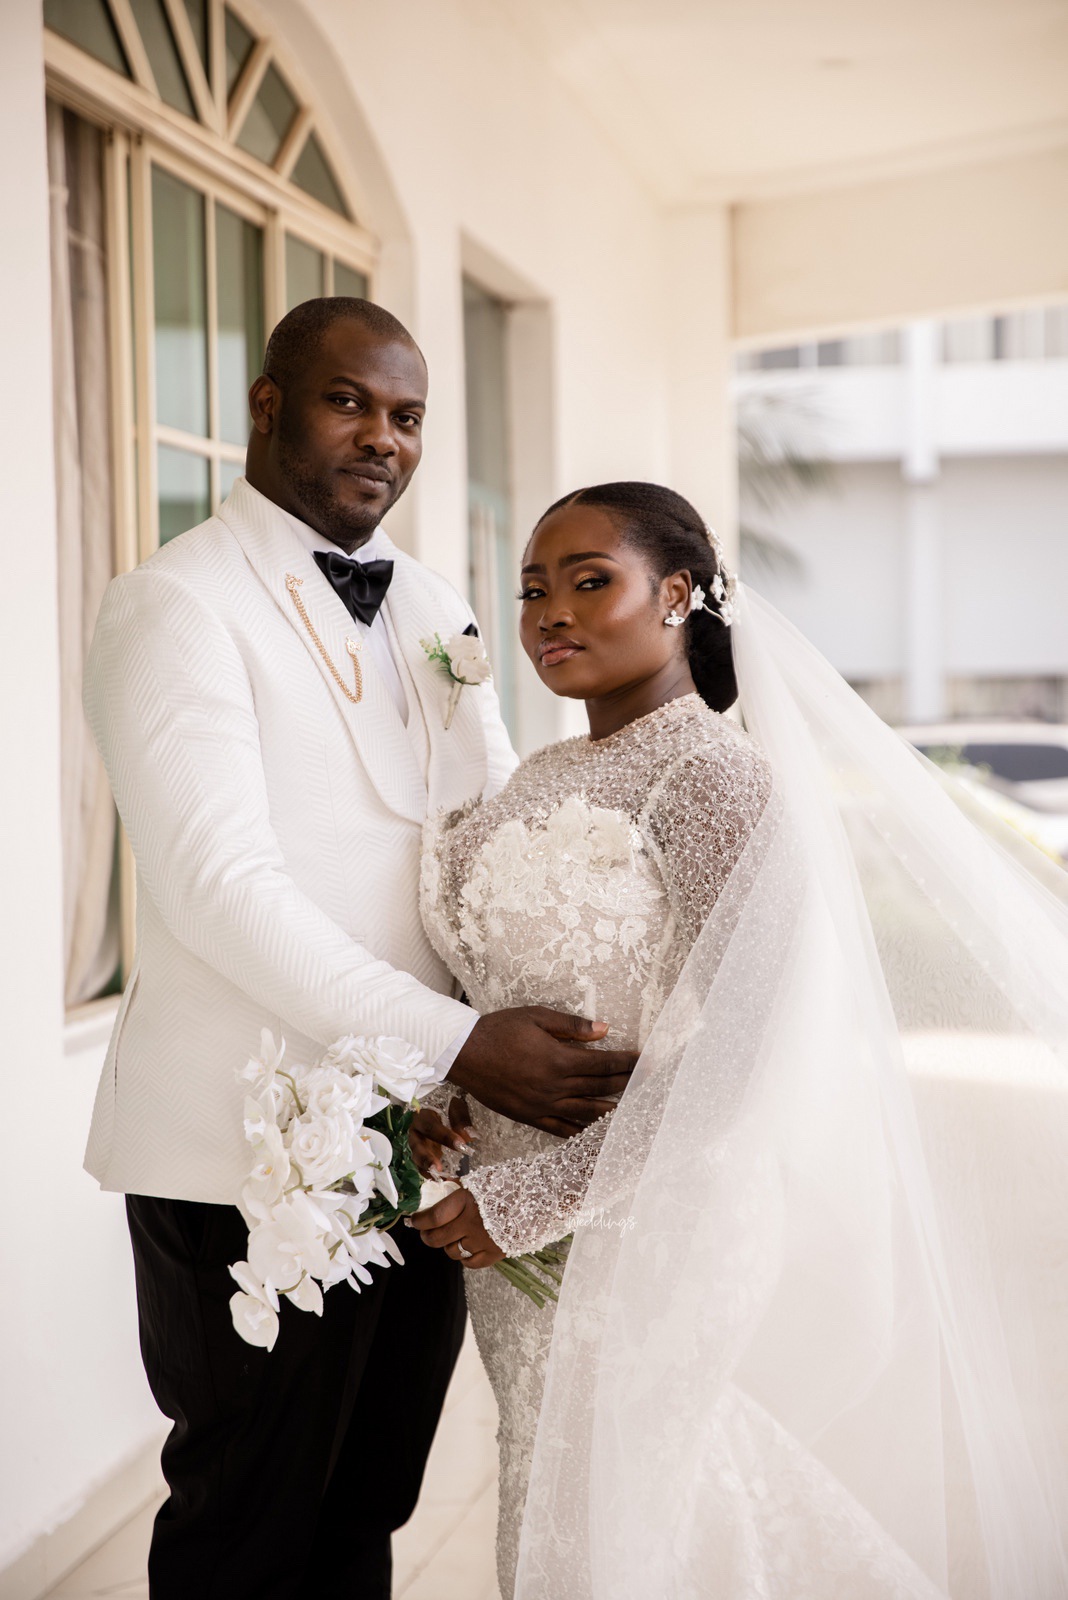 Ogochukwu & Alex’s White Wedding ceremony Was all Shades of Lovely!